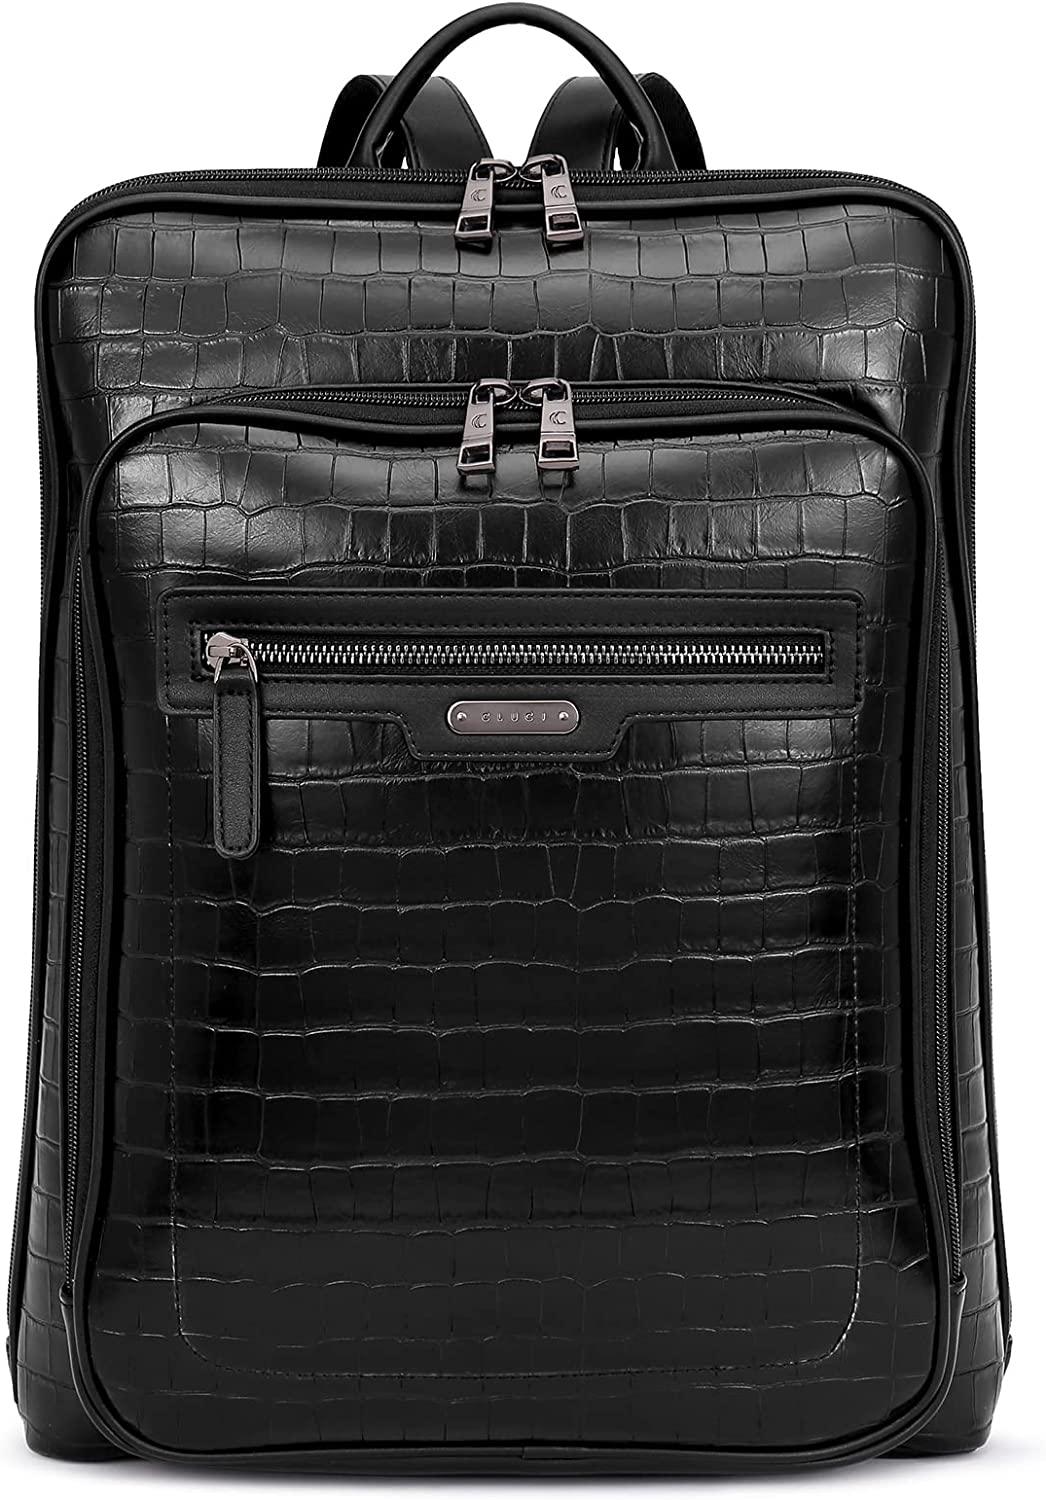 FR Fashion Co. 16" Women's Vintage Leather Travel Backpack - FR Fashion Co. 